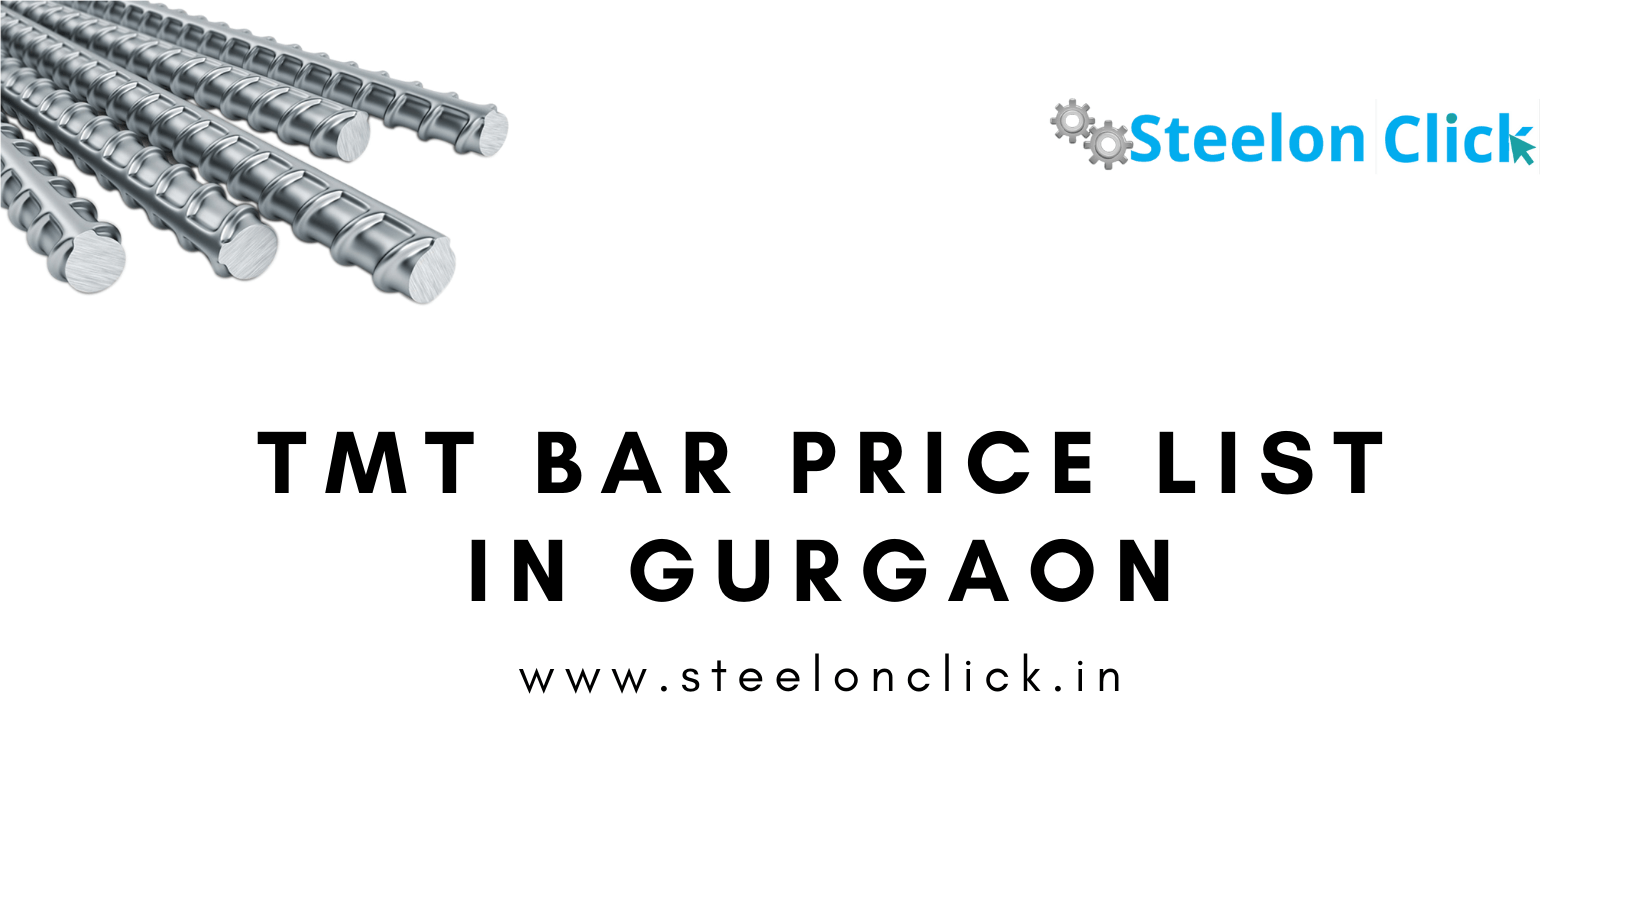 Electrosteel TMT bar price in Gurgaon